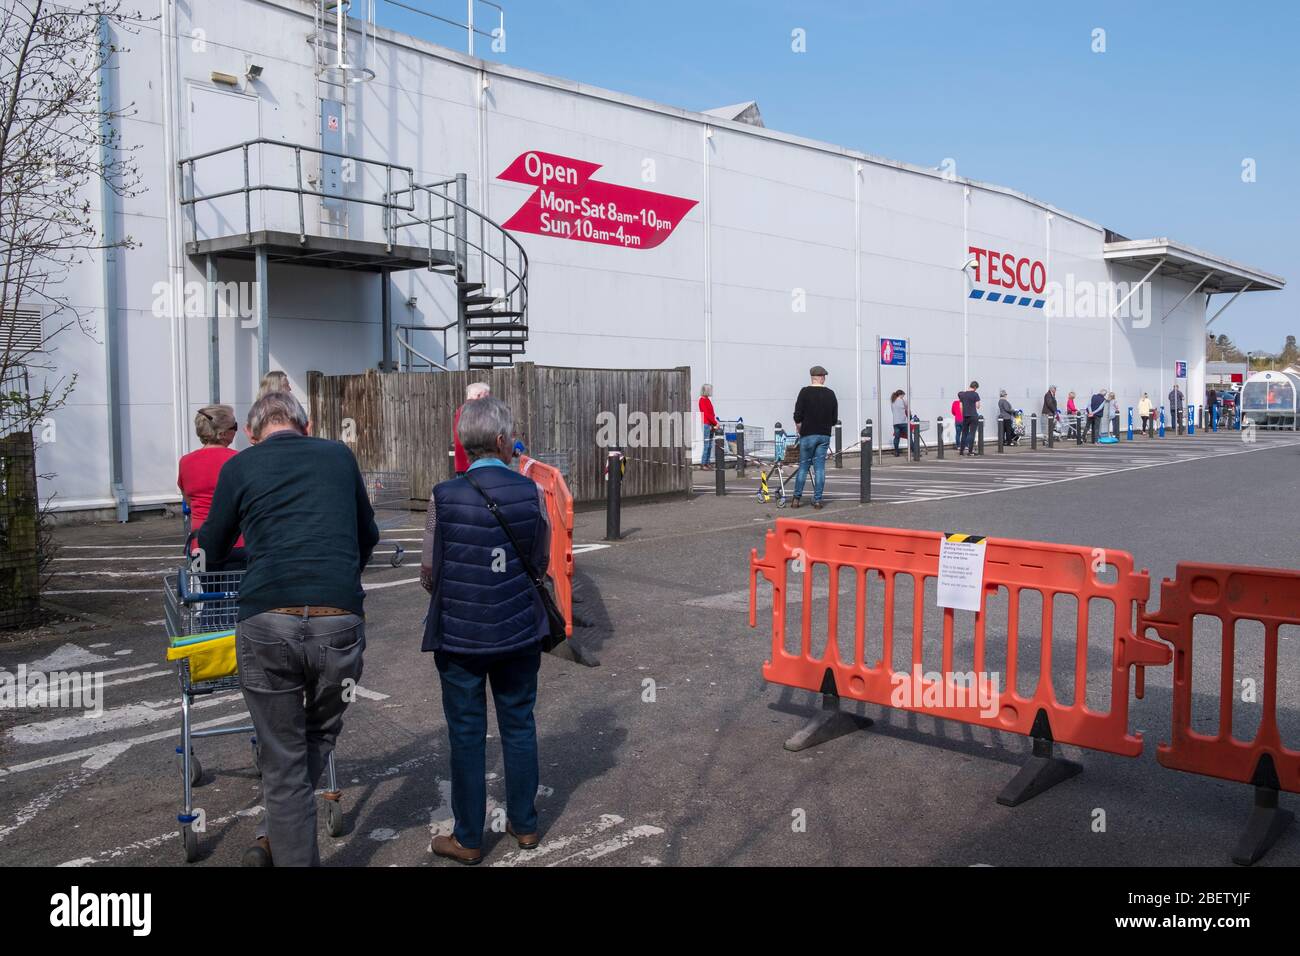 Shoppers at Tesco supermarket, Diss, Norfolk, UK,  queue 2metres apart due to the Coronavirus epidemic. Stock Photo